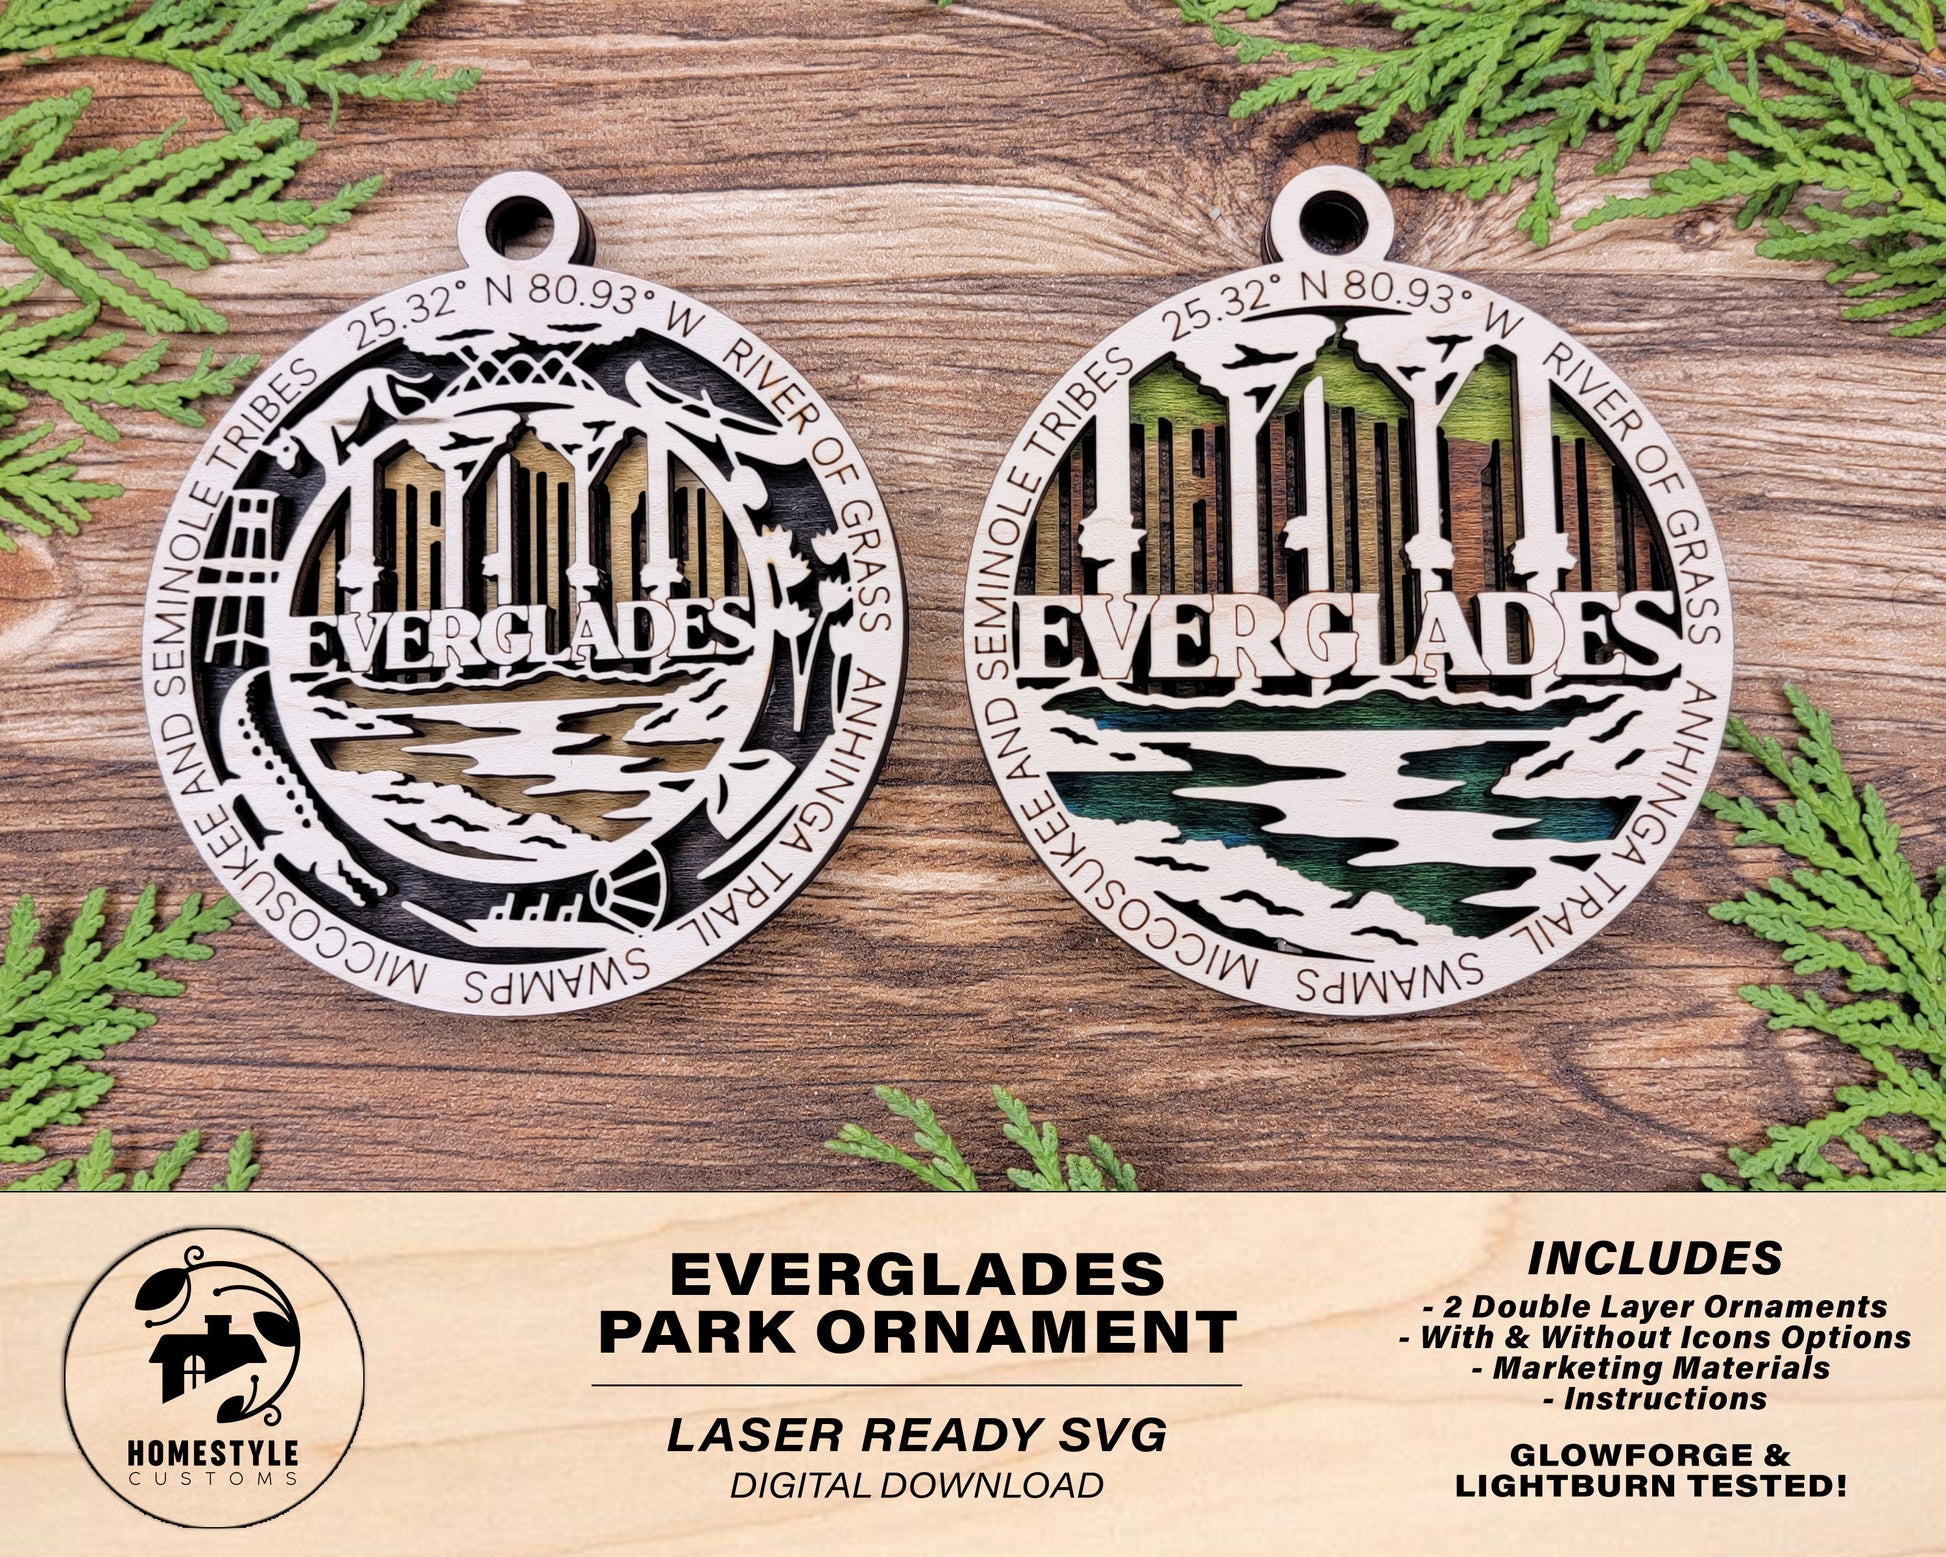 Everglades Park Ornament - Includes 2 Ornaments - Laser Design SVG, PDF, AI File Download - Tested On Glowforge and LightBurn